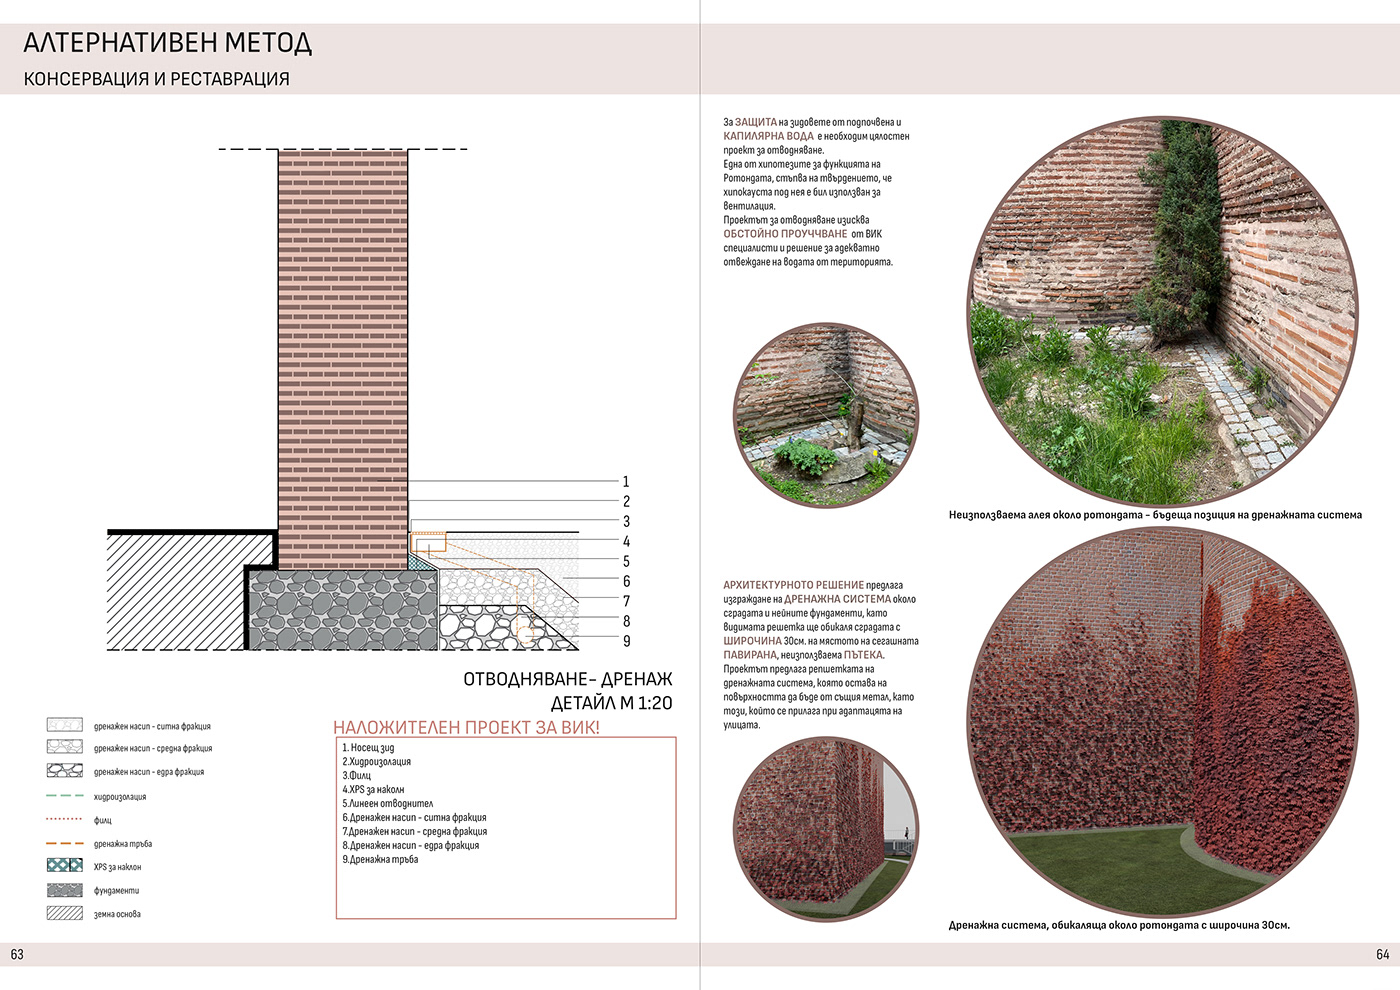 Adaptation architecture conceptual conservation design detail heritage landscaping restoration ruins